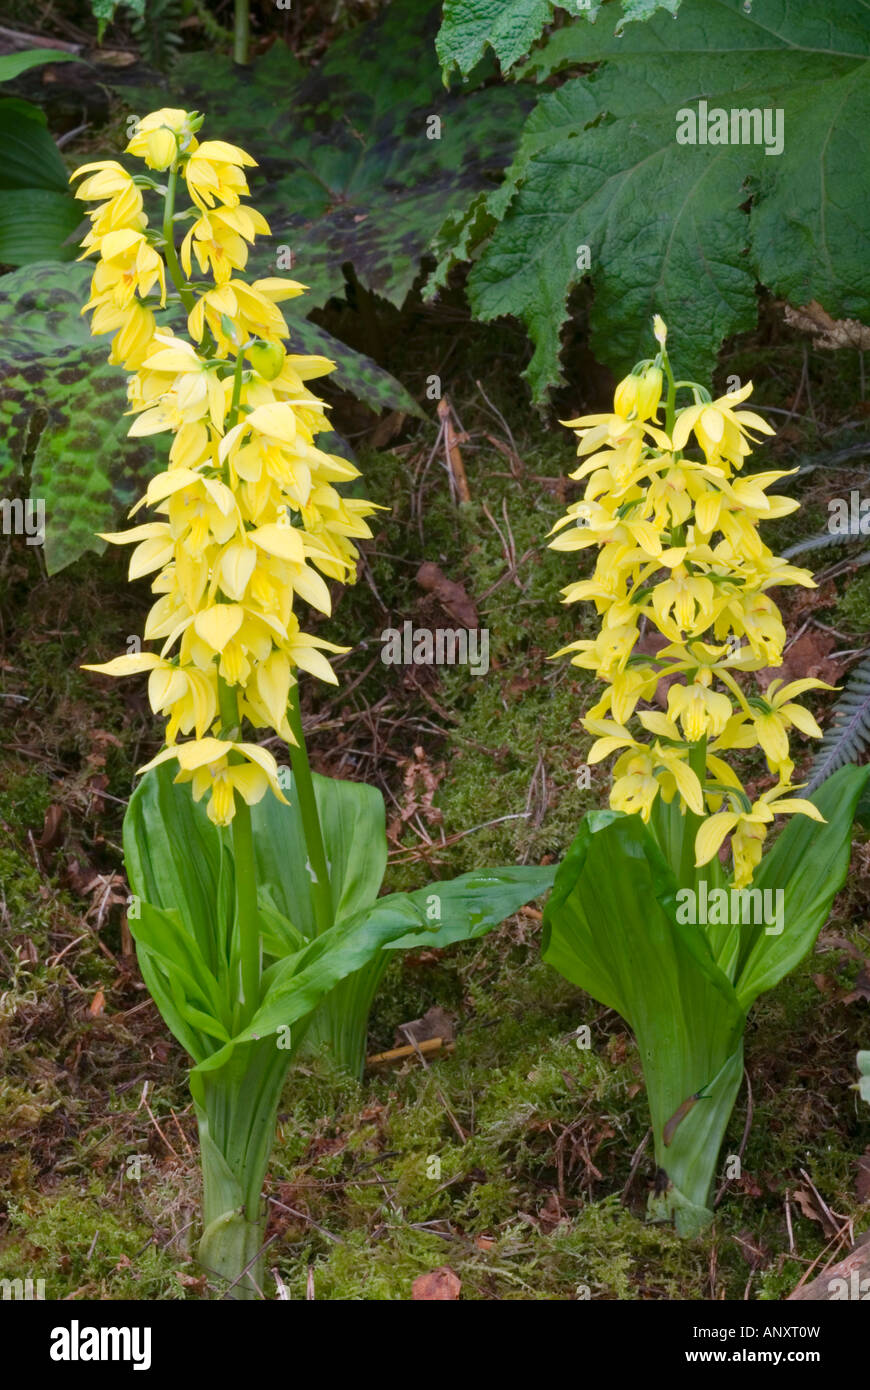 Calanthe sieboldii hardy orchids Yellow Ebine growing in ground, plant habit in garden Stock Photo